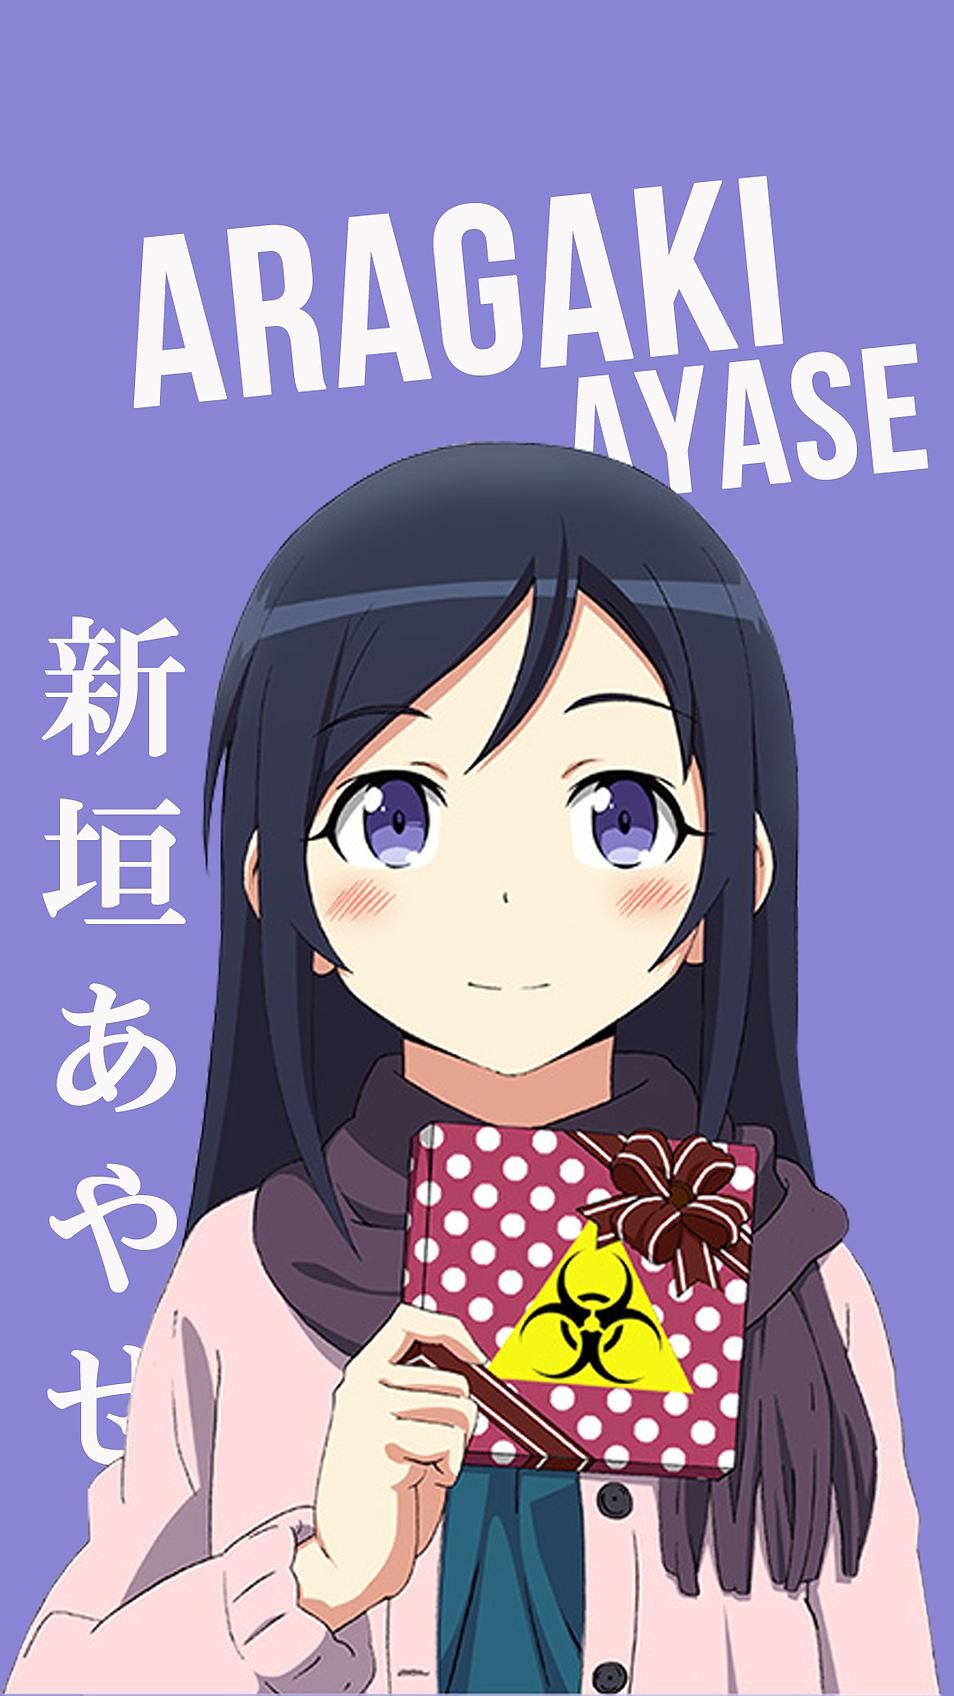 Ayase Aragaki Anime Wallpapers